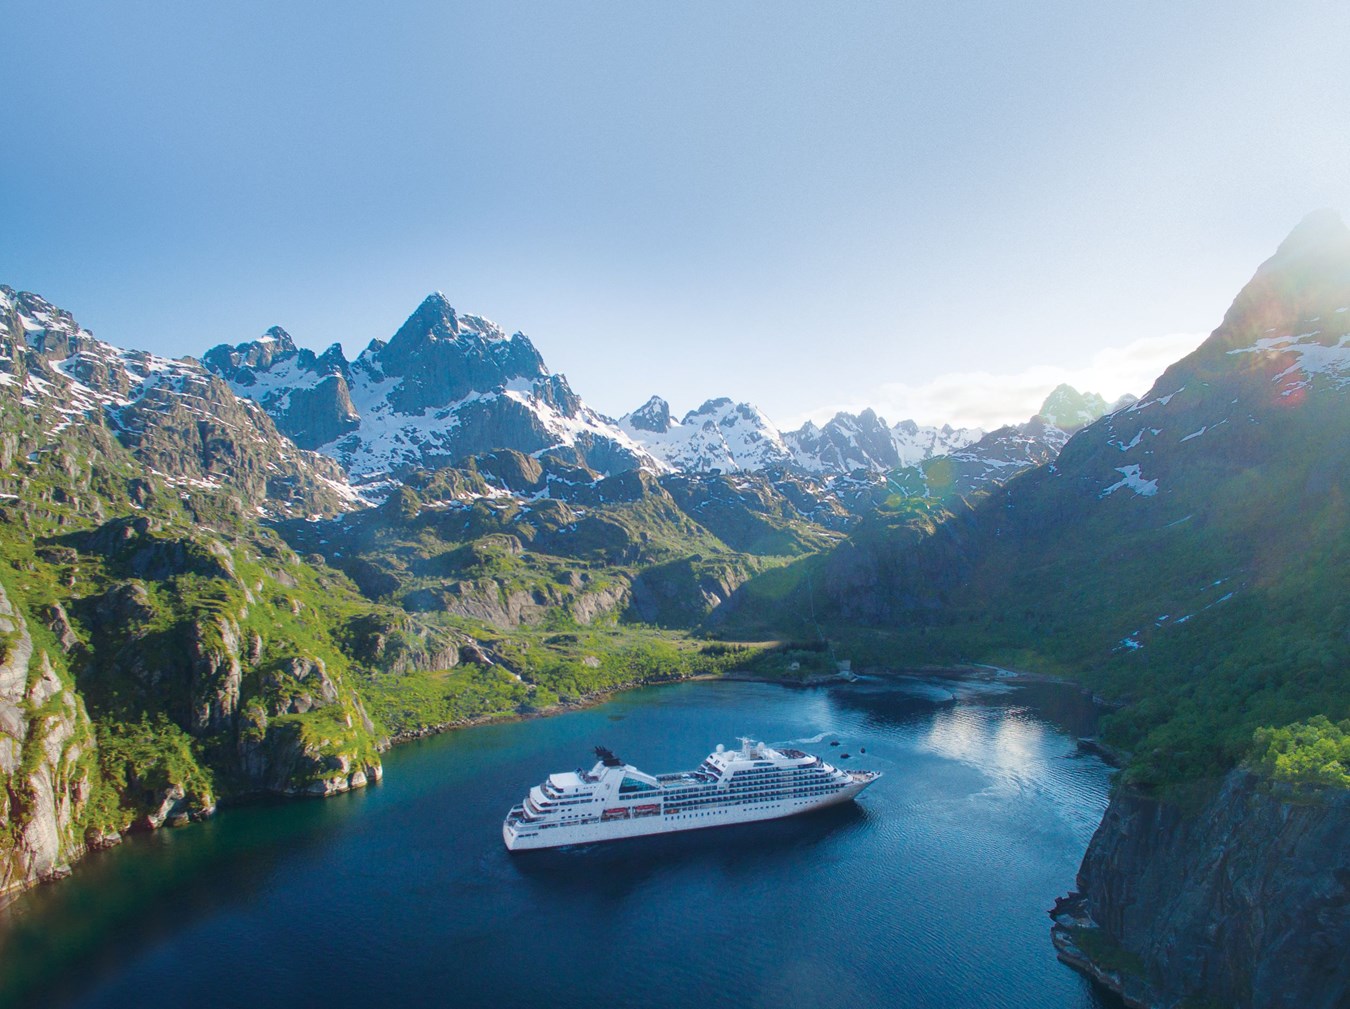 msc cruise noorse fjorden 2022